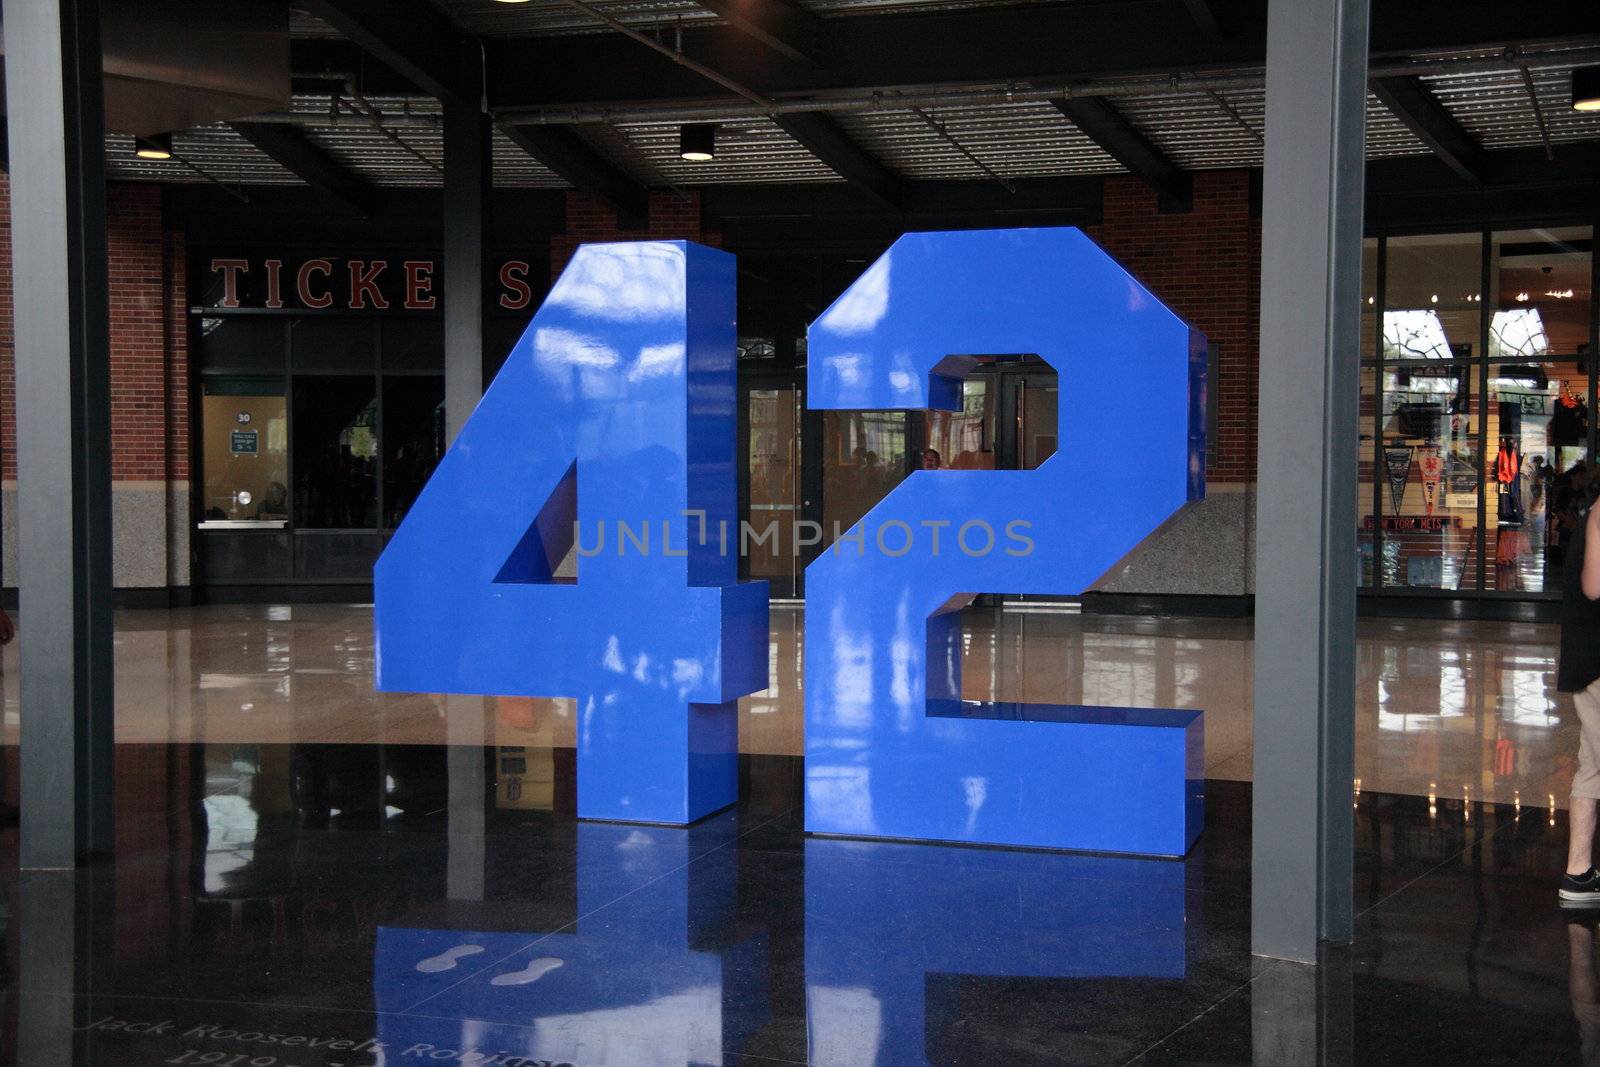 New York Mets retired numbers inside stadium rotunda